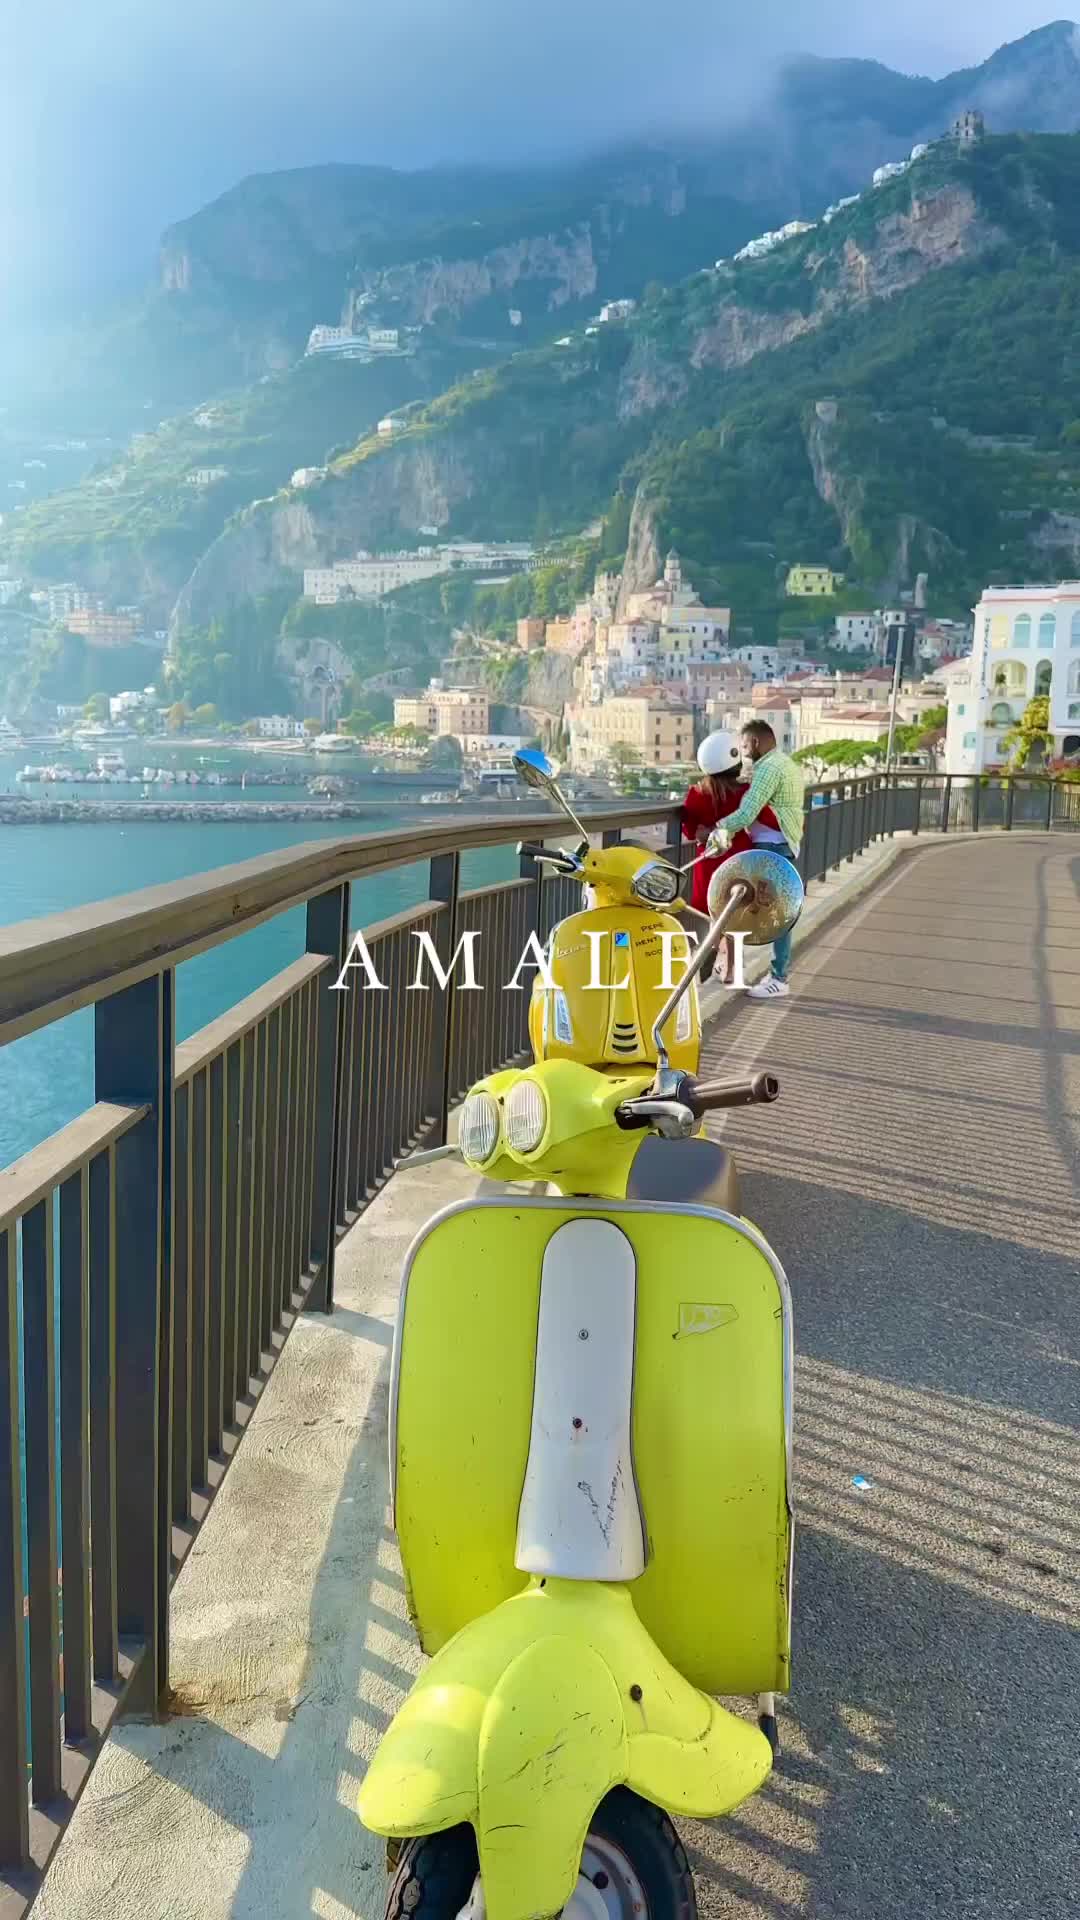 Who’s going to #Amalfi this summer 😍😍

#costieraamalfitana #amalficoast #italia #italy